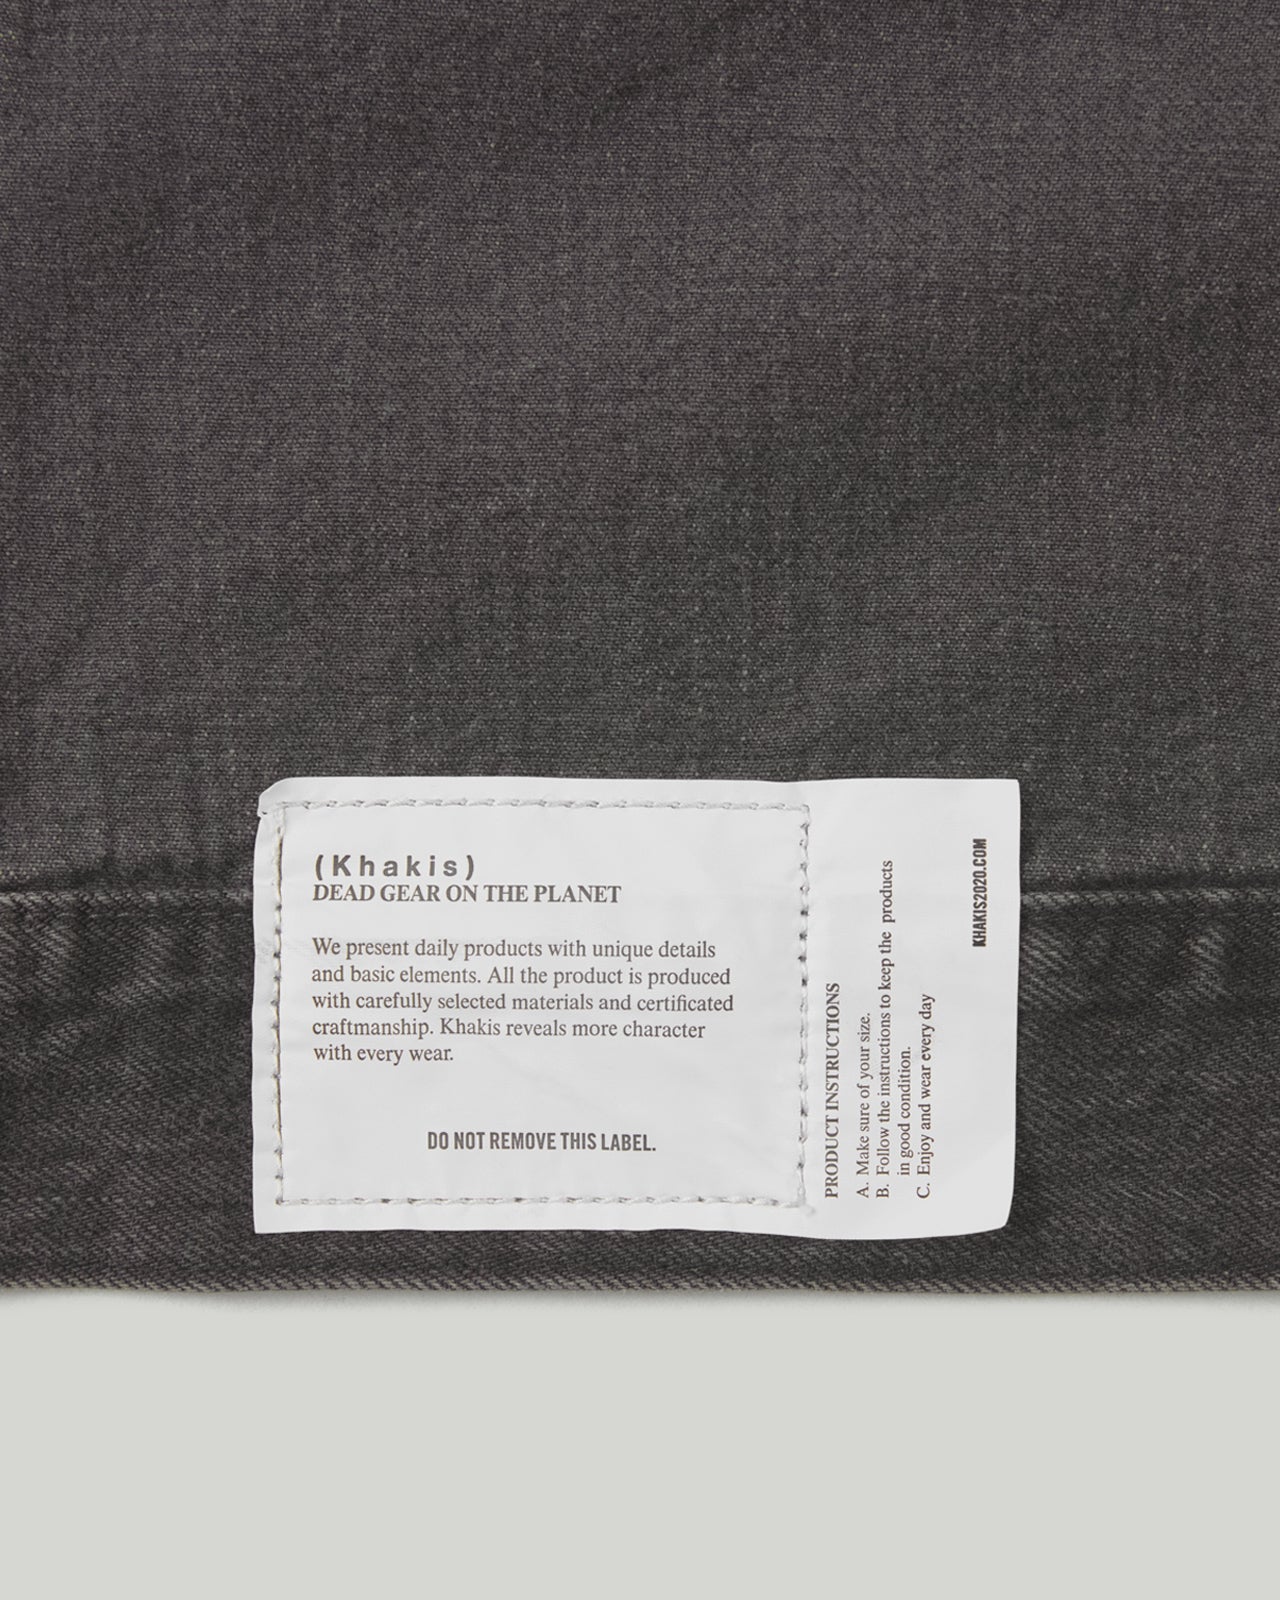 Double Pocket Jean Jacket Grey